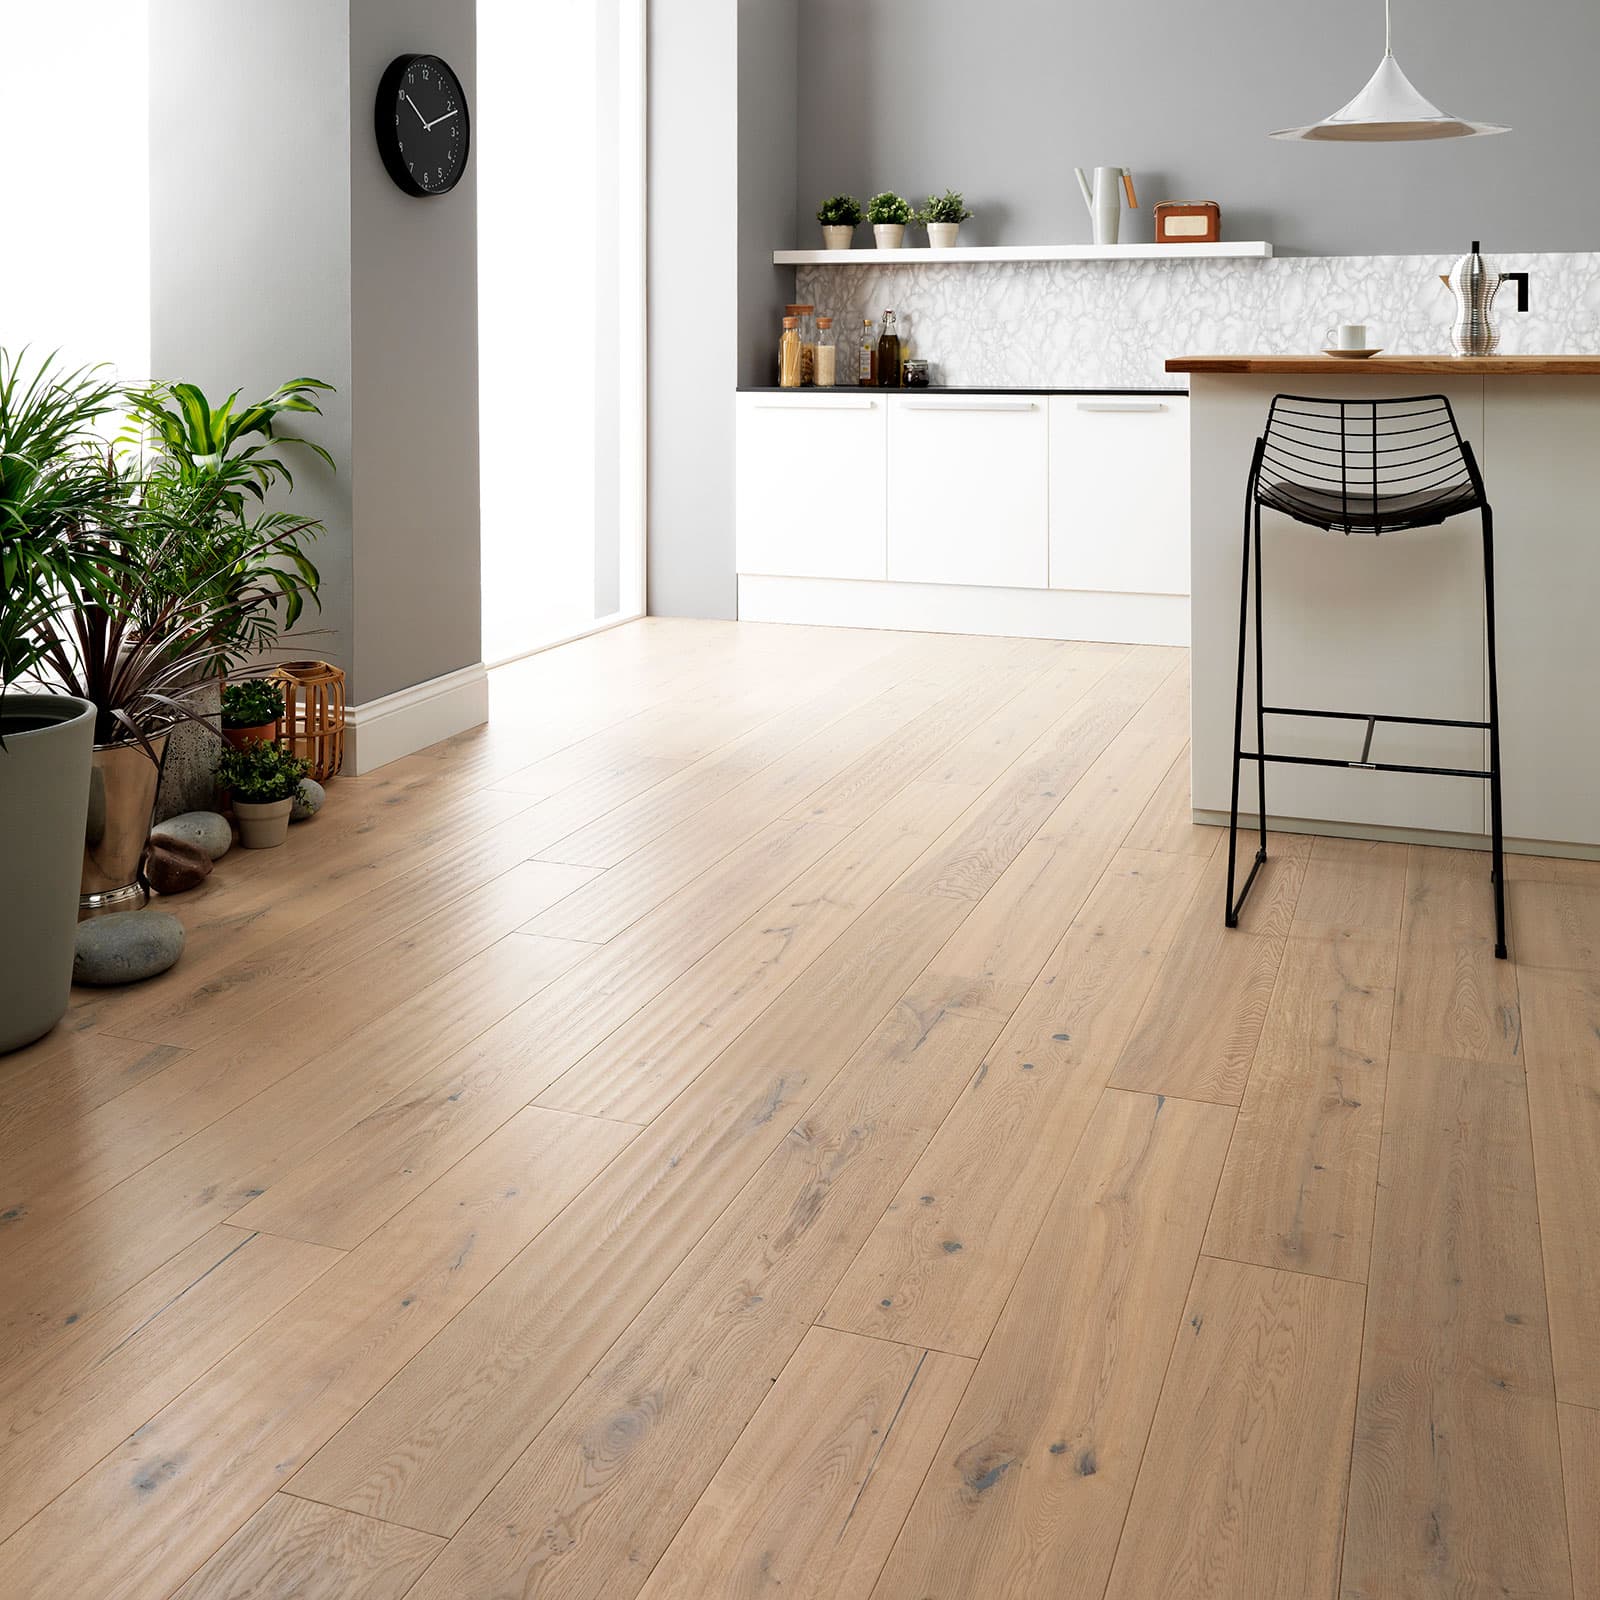 2019 Kitchen Trends Inspiration Woodpecker Flooring